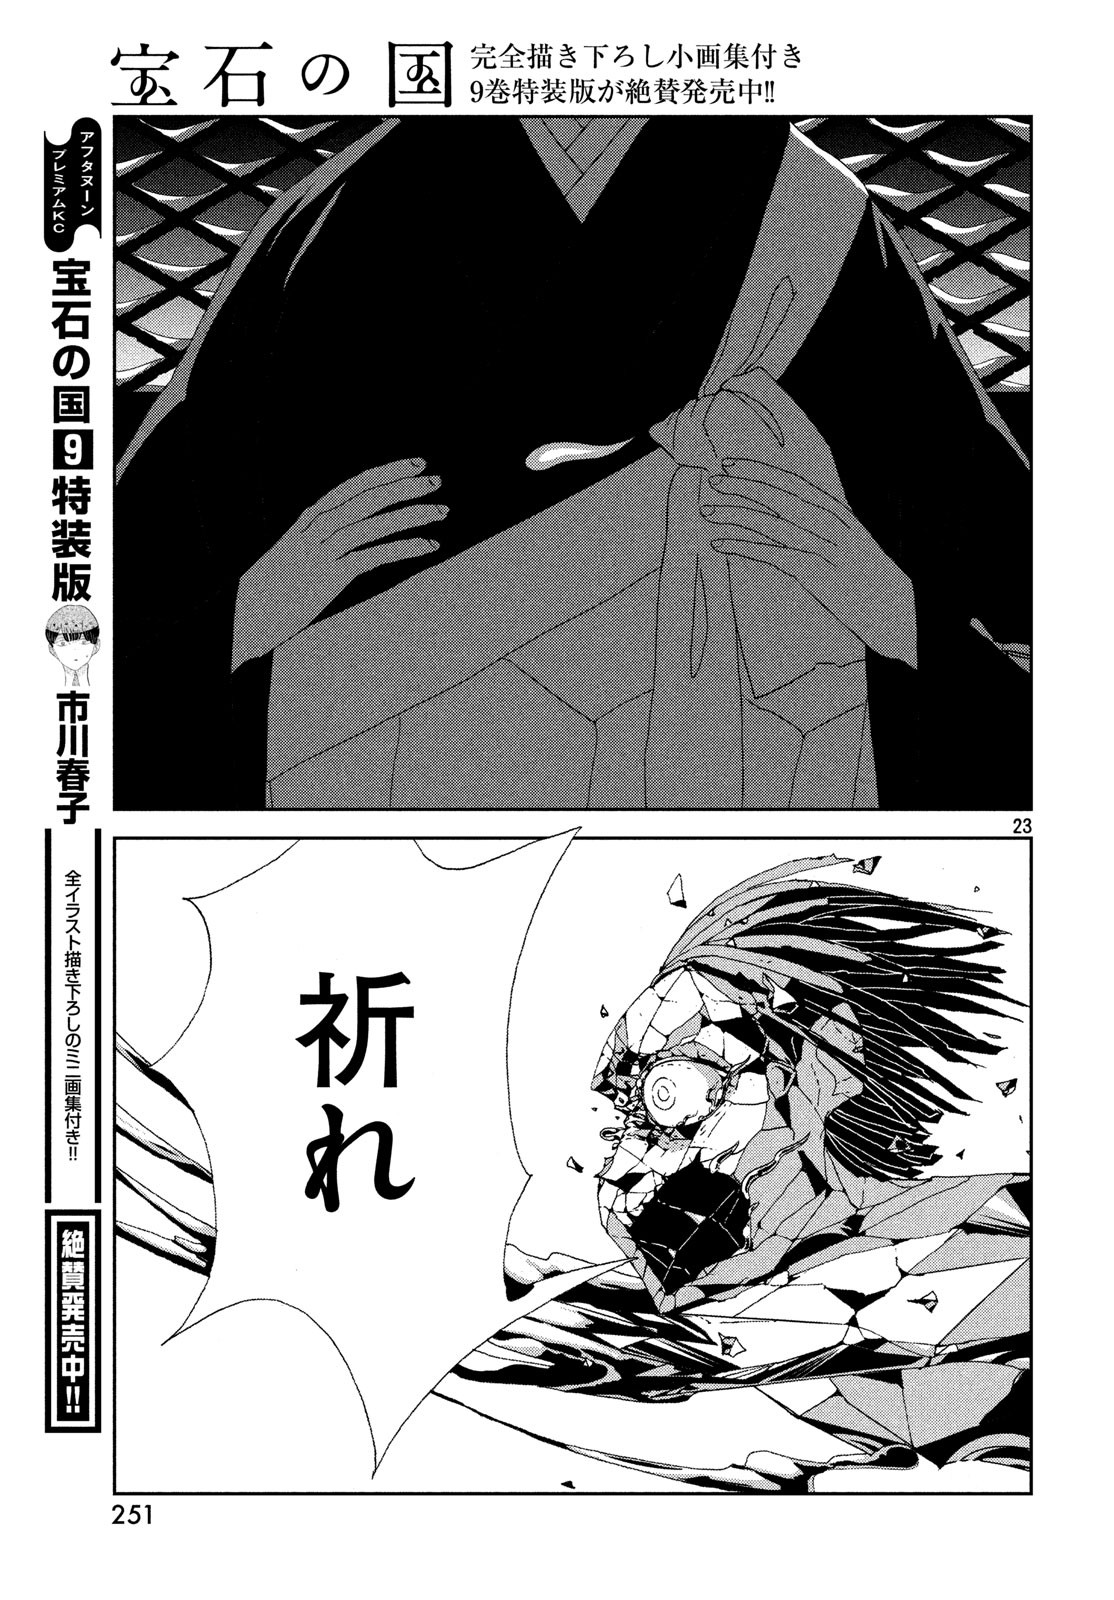 Houseki no Kuni - Chapter 79 - Page 23